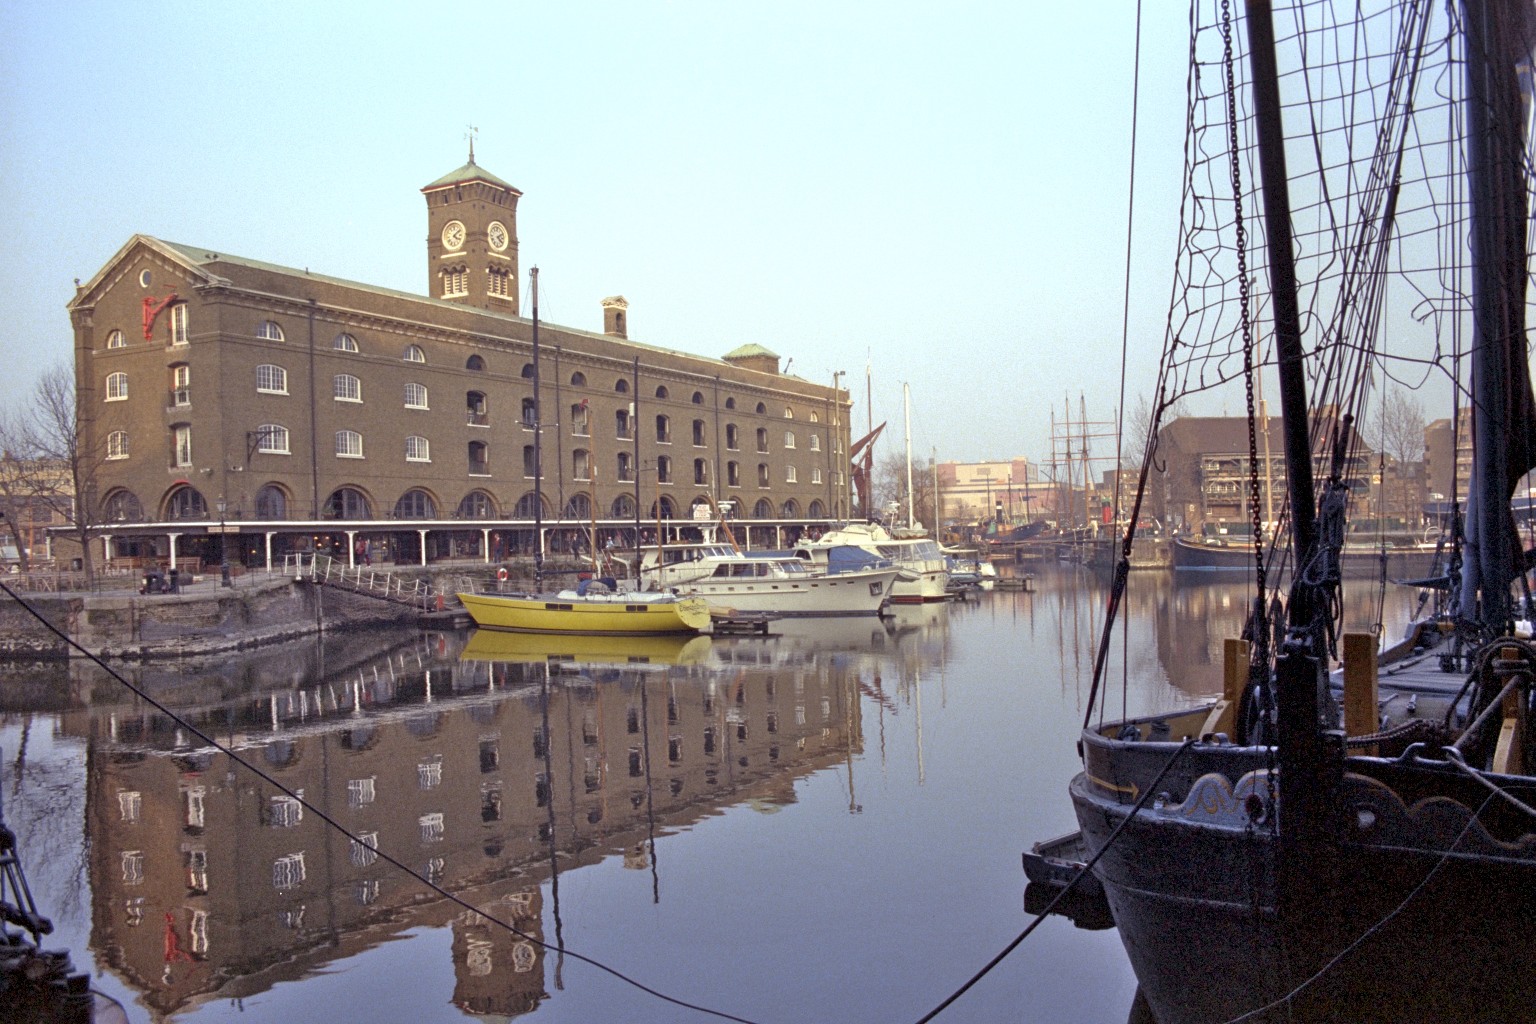 St. Katherine's Dock, London